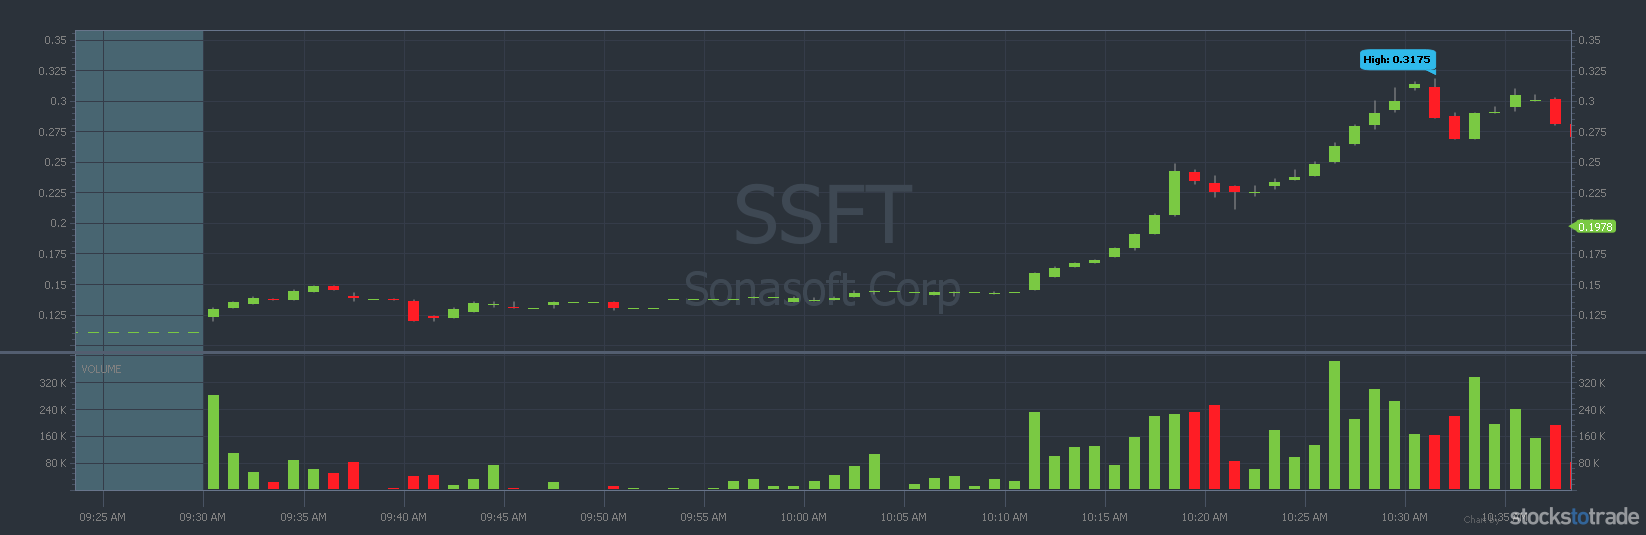 SSFT june 11 2020 stock chart